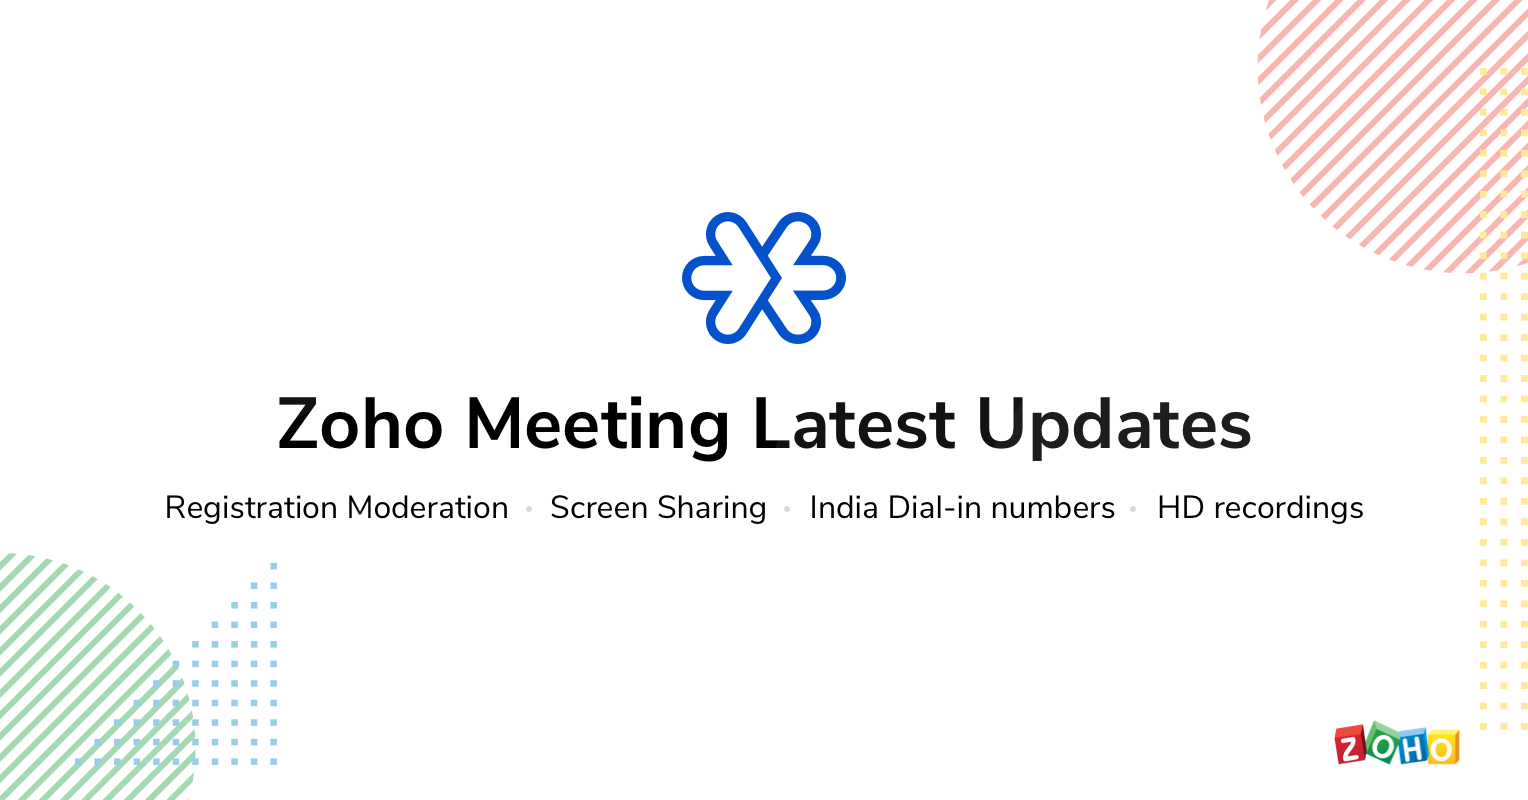 Zoho Meeting Latest Updates